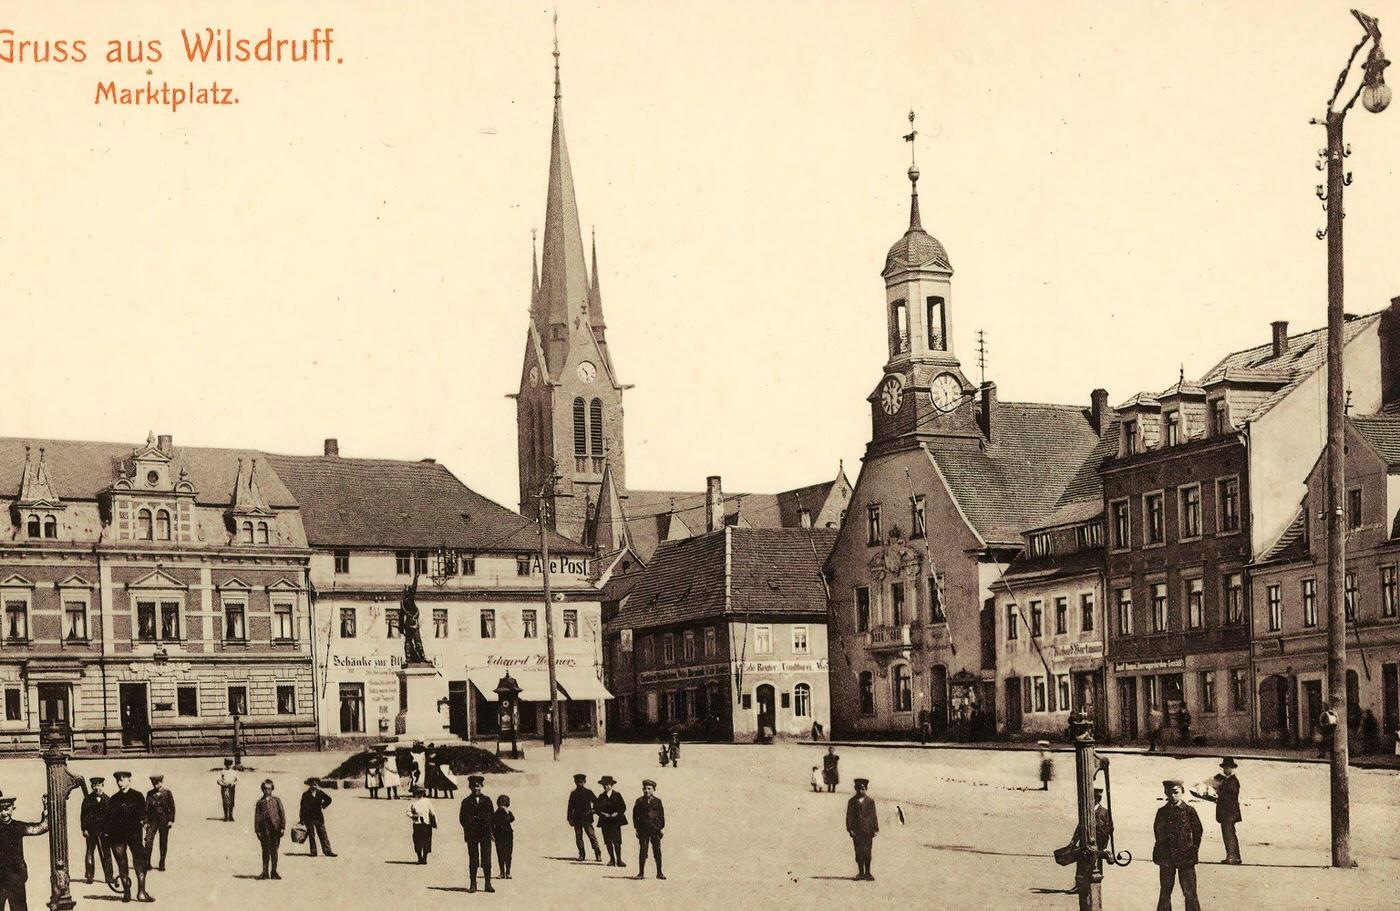 Churches in Wilsdruff, Water wells, Town halls, 1900s, Germany.